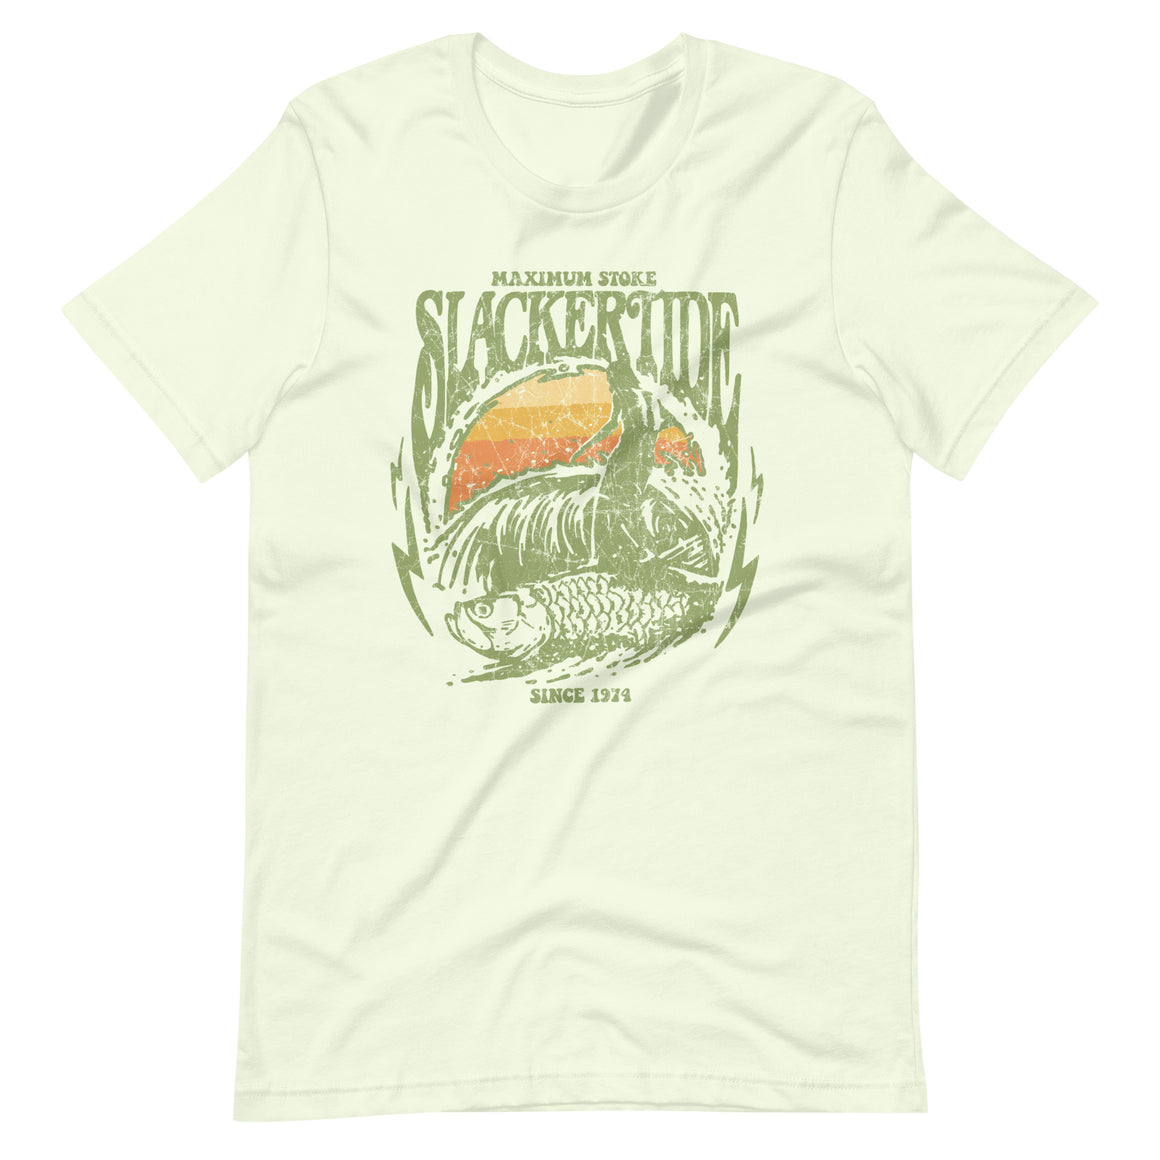 Shorebreaker T-shirt